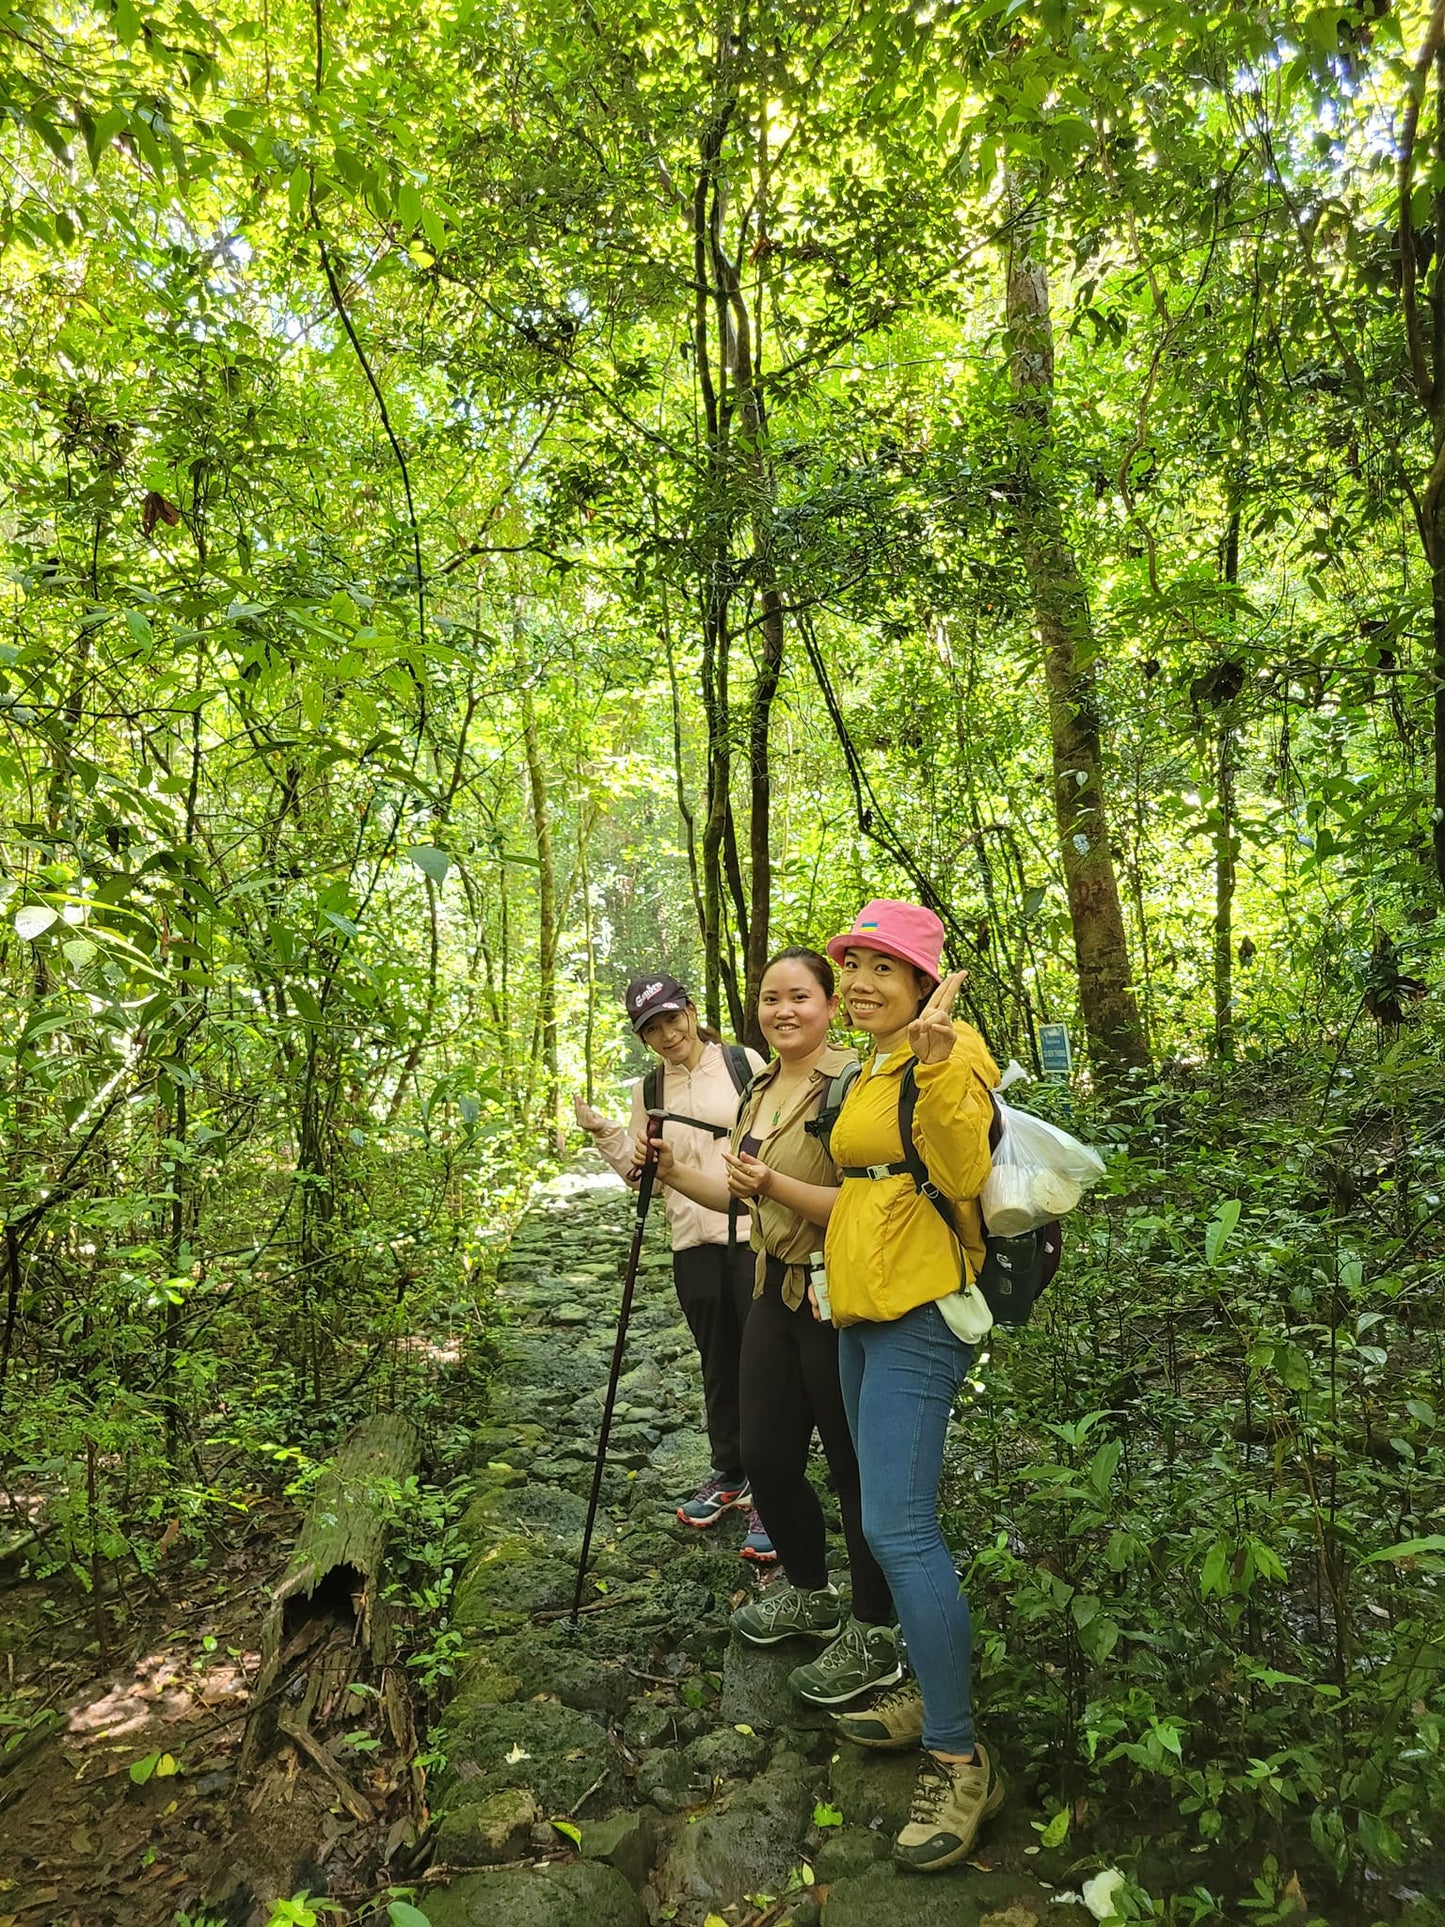 6A3: Parque Nacional Nam Cat Tien: ¡donde las maravillas de la naturaleza cobran vida!